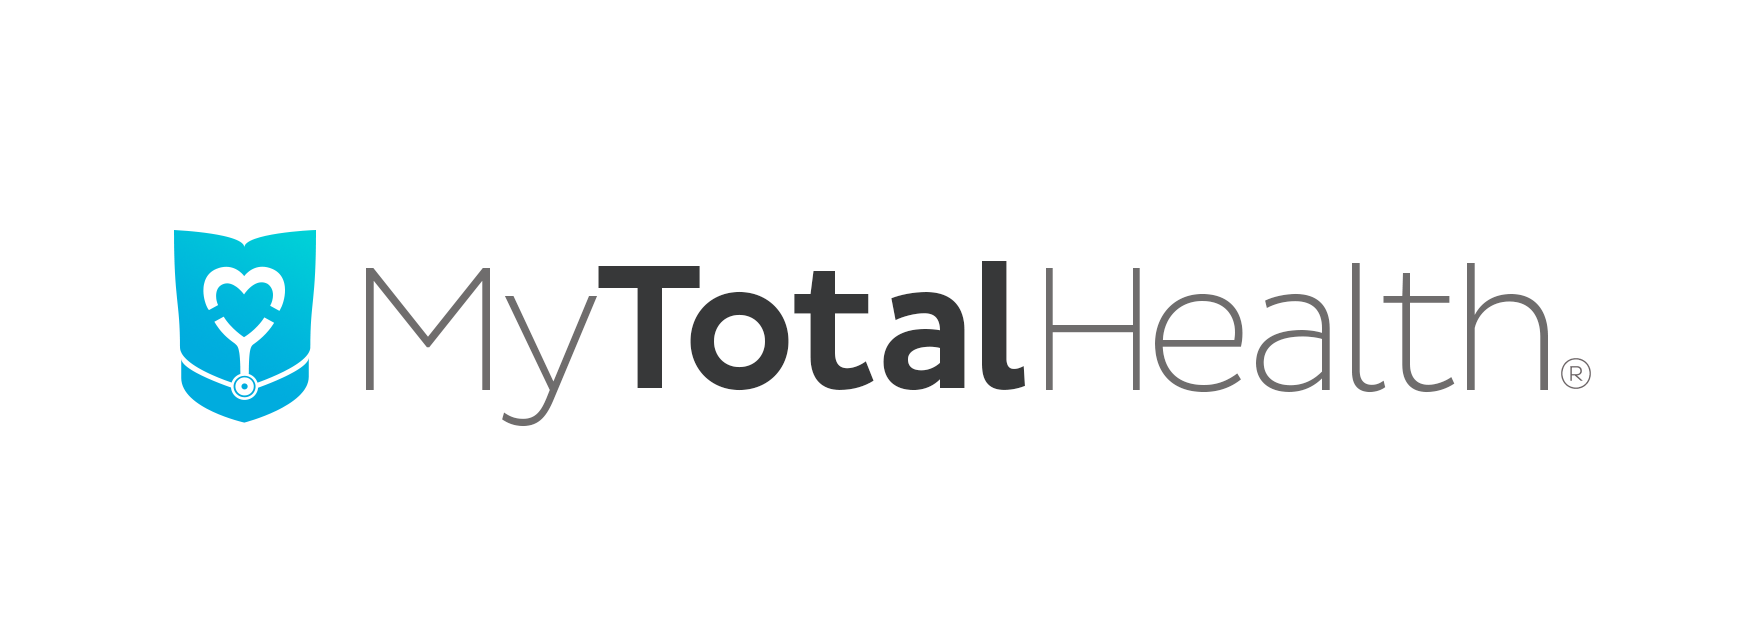 MyTotalHealth logo